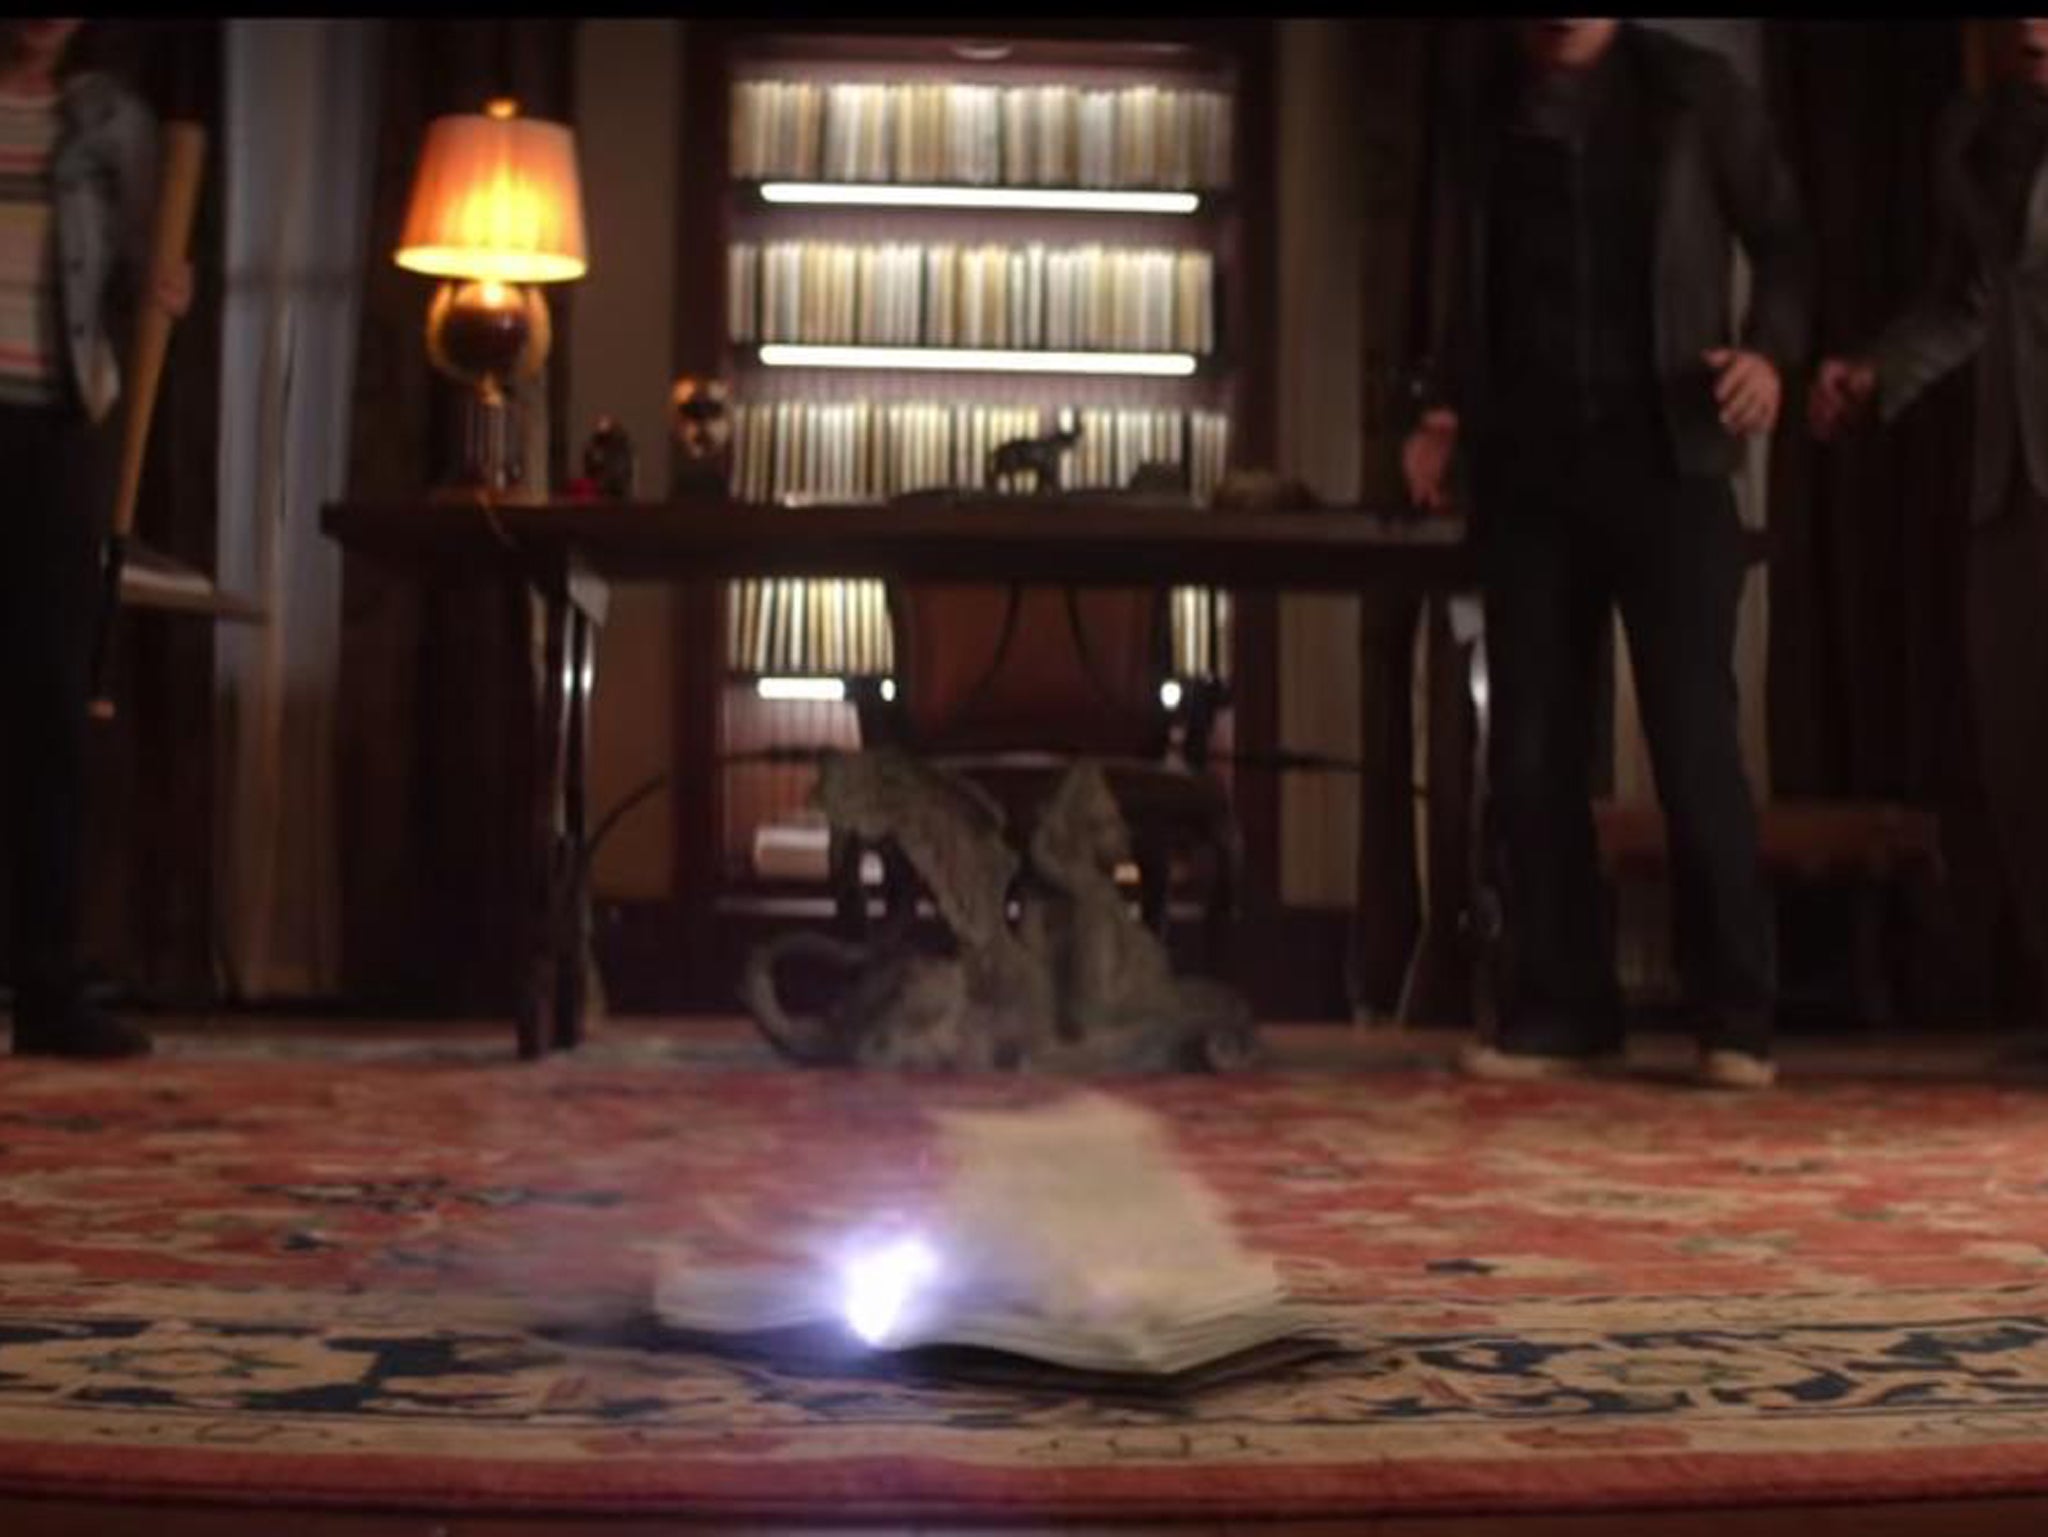 Goosebumps trailer reveals movie's new take on RL Stine's books